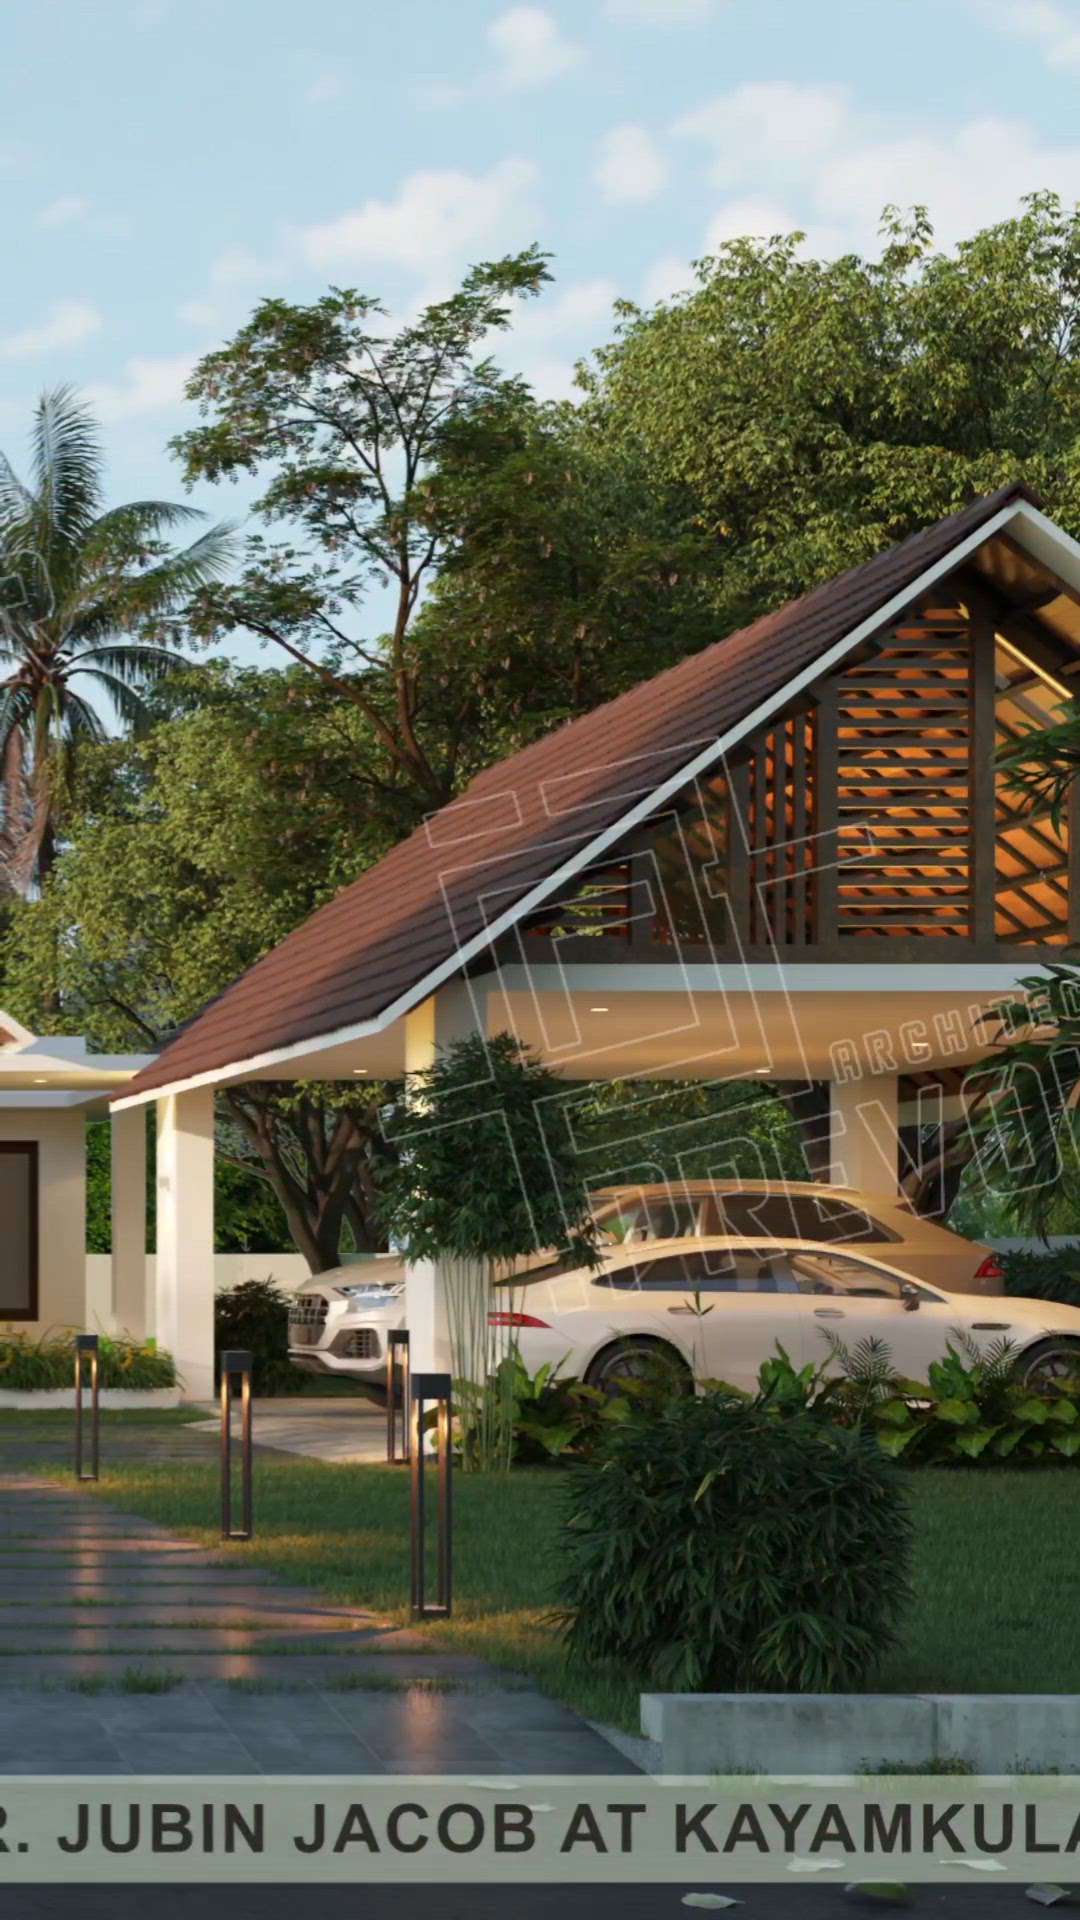 ✨️client: Mr. Jubin
location: Kayamkilam #tropicalhouse #keralaarchitectures #SlopingRoofHouse #tip #tips #keralahomes #keralahomedesigns #koloapp